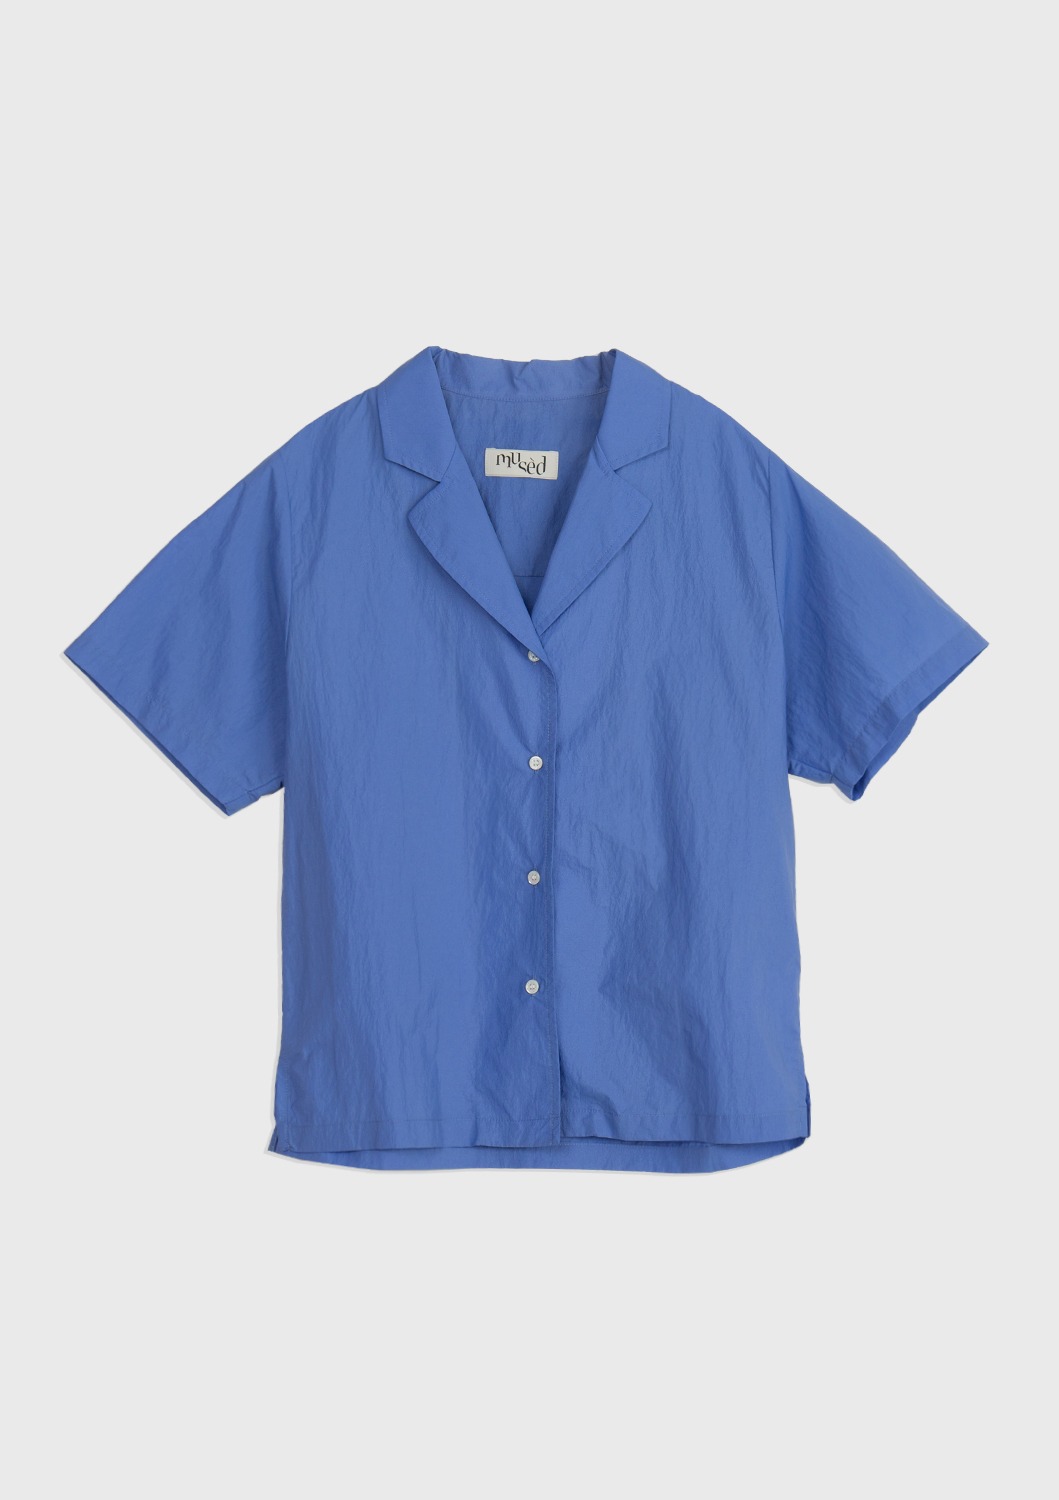 Mused Resort Shirt - Blue